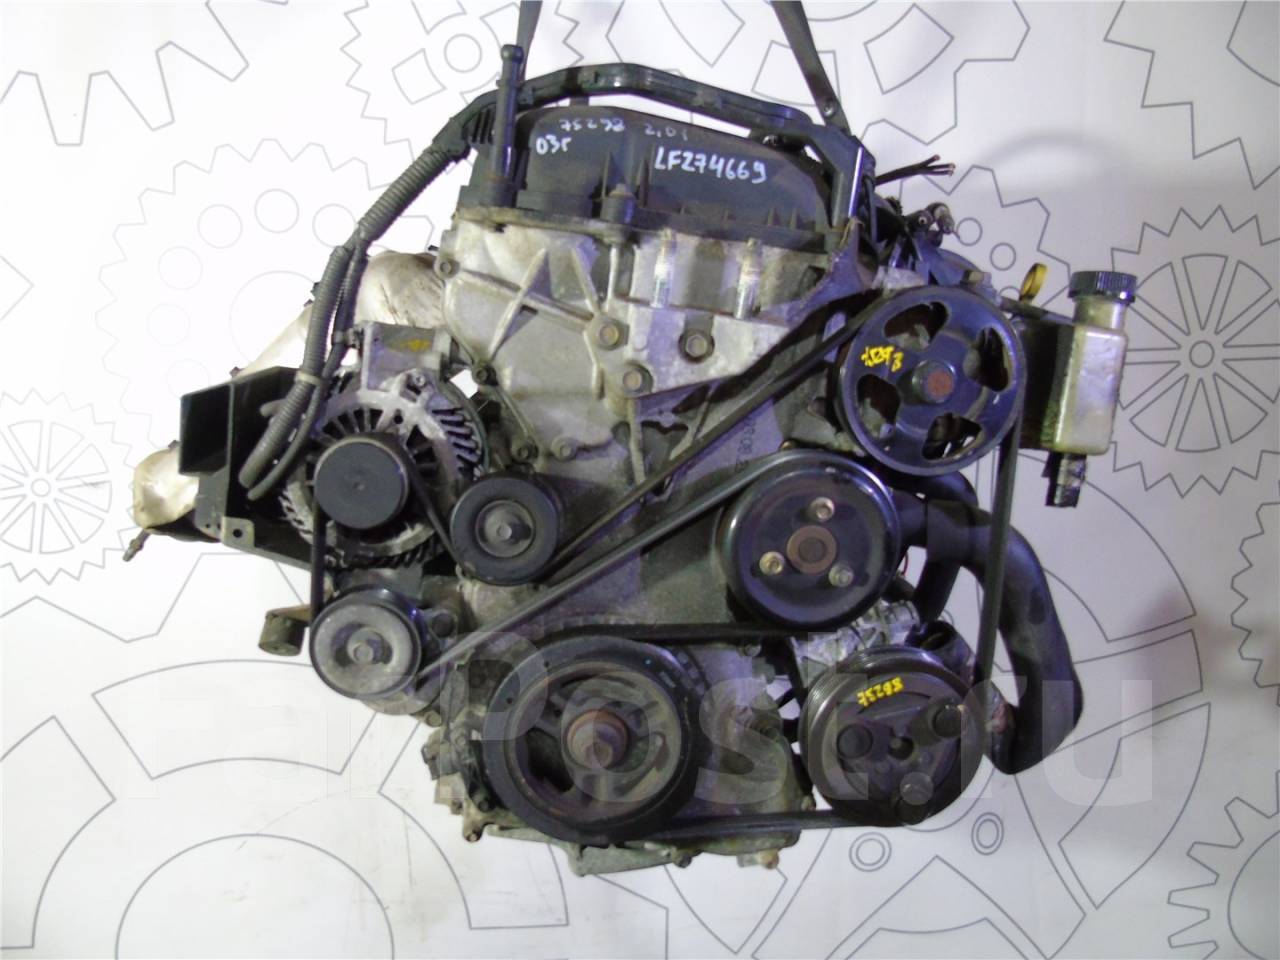 Двигатель мазда сх7 купить. Двигатель Мазда 6 lff7. Двигатель Мазда 6 gg 2.3 АКПП. Двигатель Мазда 2.0 бензин. Lff7 двигатель для Мазда 5.